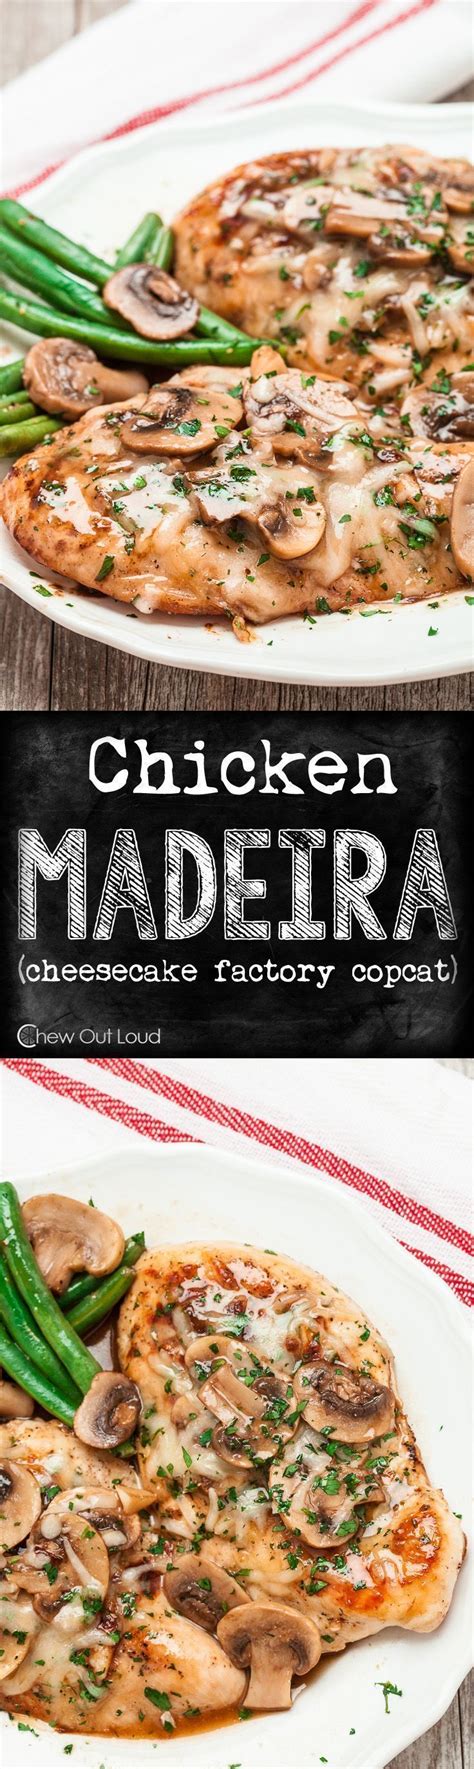 Copycat Cheesecake Chicken Marsala Chicken Marsala Cheesecake Factory